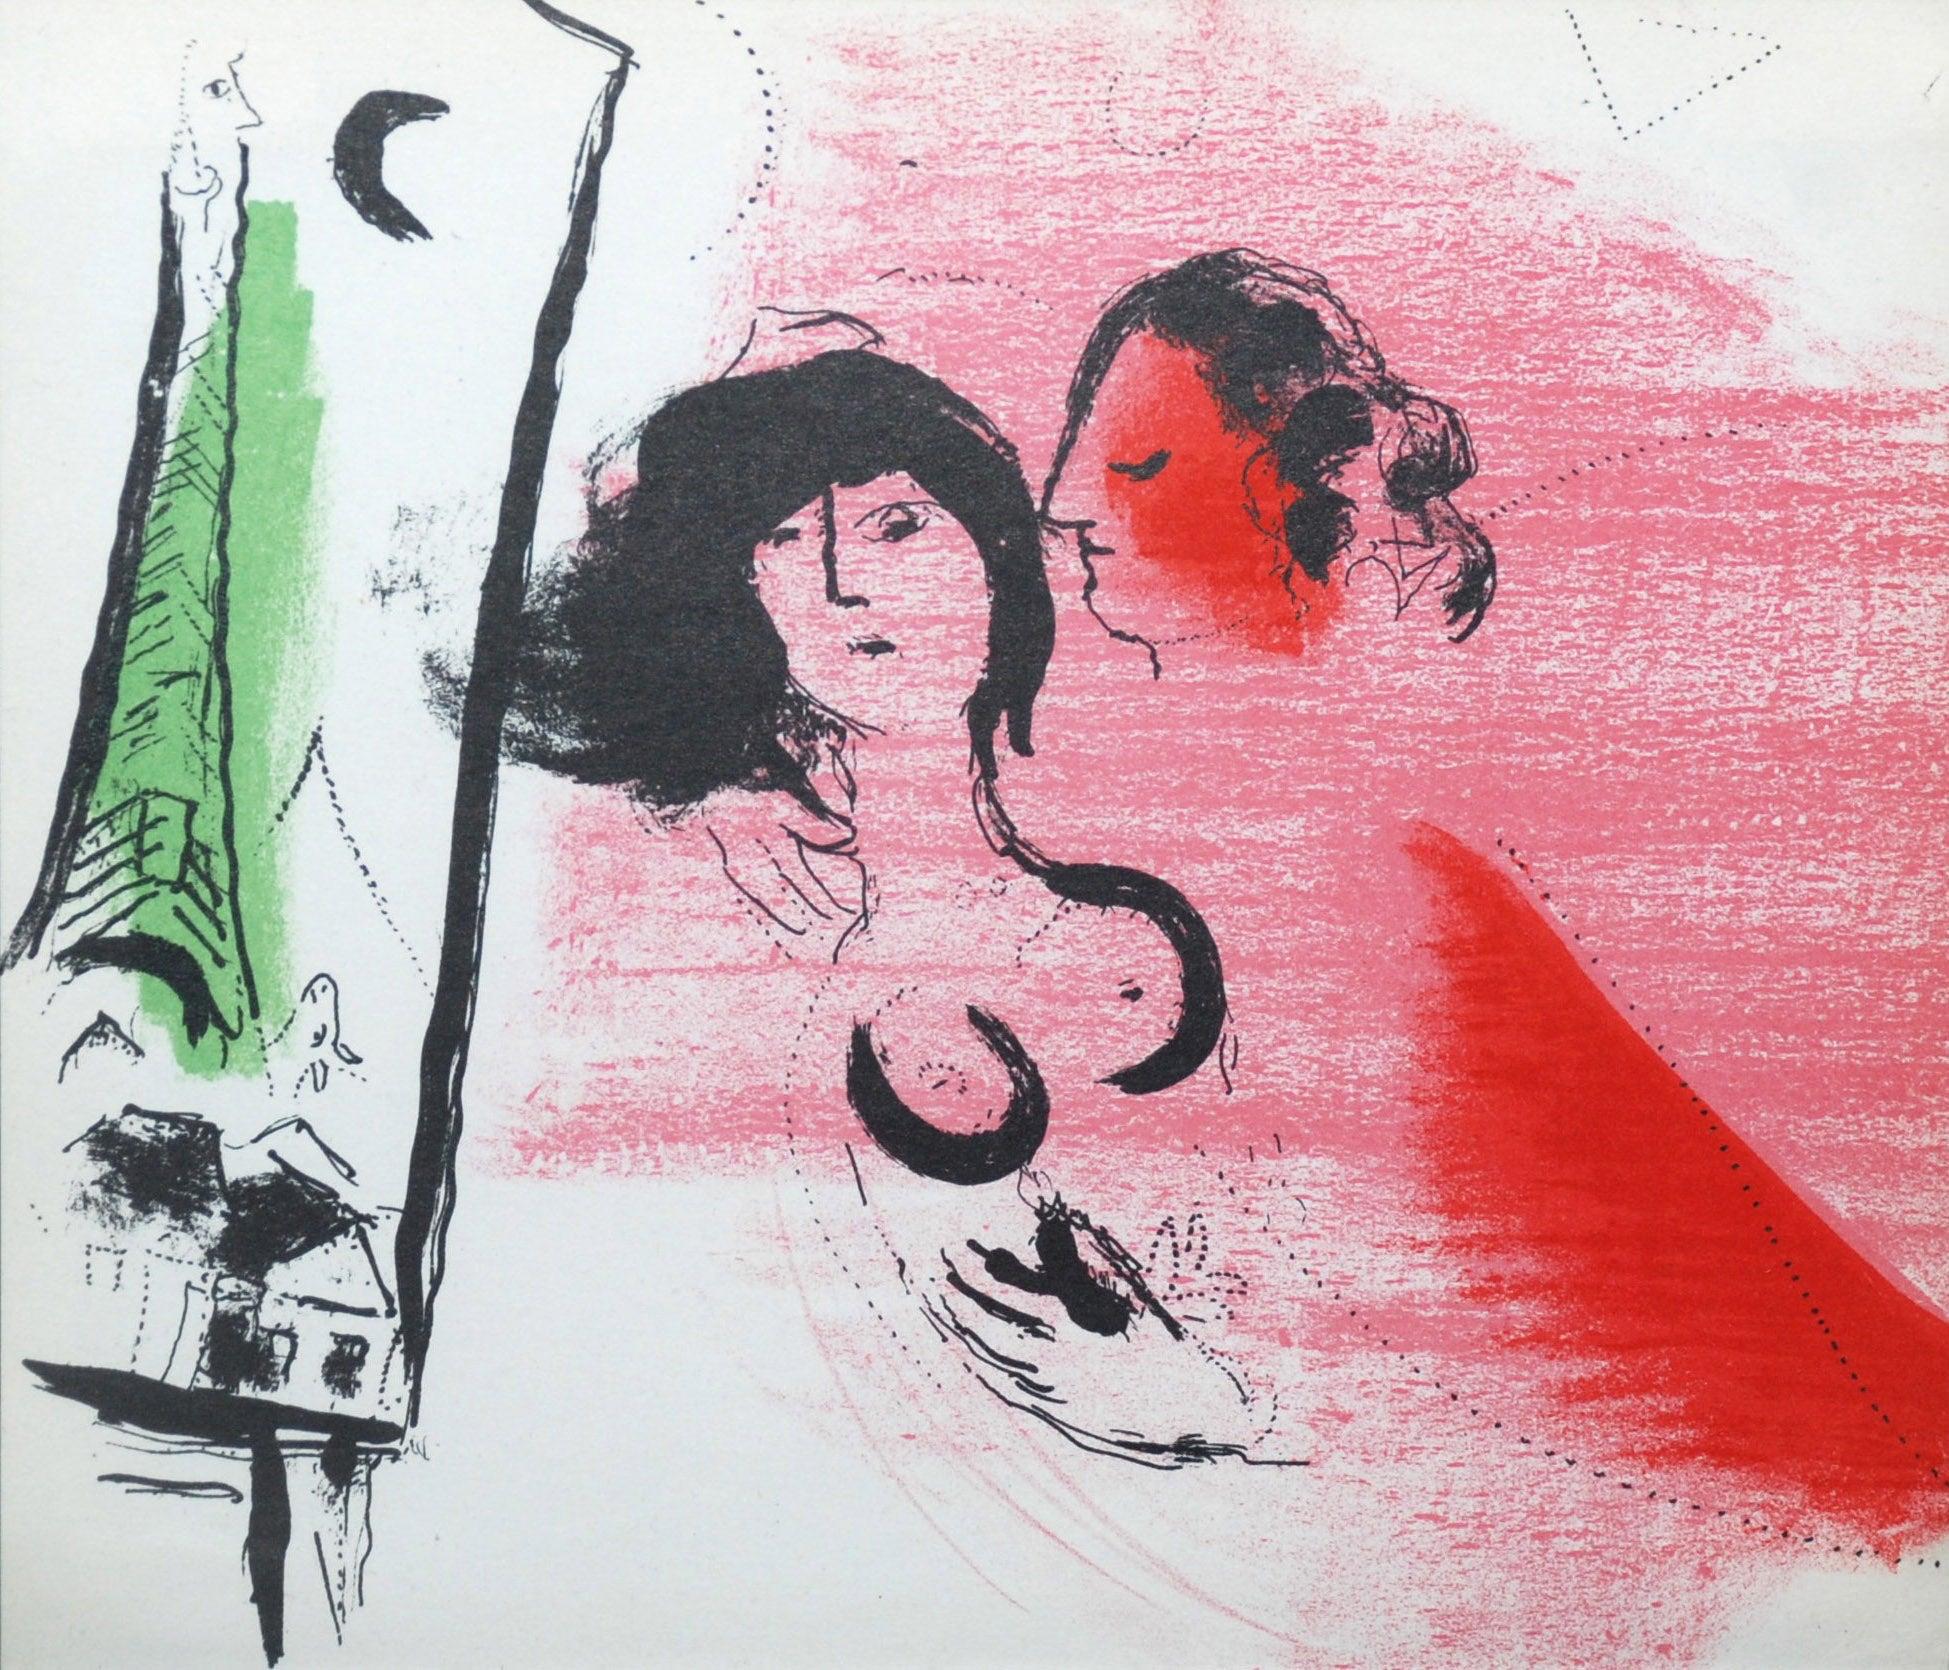 Artist: Marc Chagall
Title: The Green Eiffel Tower
Portfolio: 1957 Chagall - Jacques Lassaigne
Medium: Original lithograph
Year: 1957
Edition: 6,000
Frame Size: 13 1/2" x 15 1/2"
Sheet Size: 7 7/8" x 9" 
Image Size: 7 7/8" x 9" 
Signature: